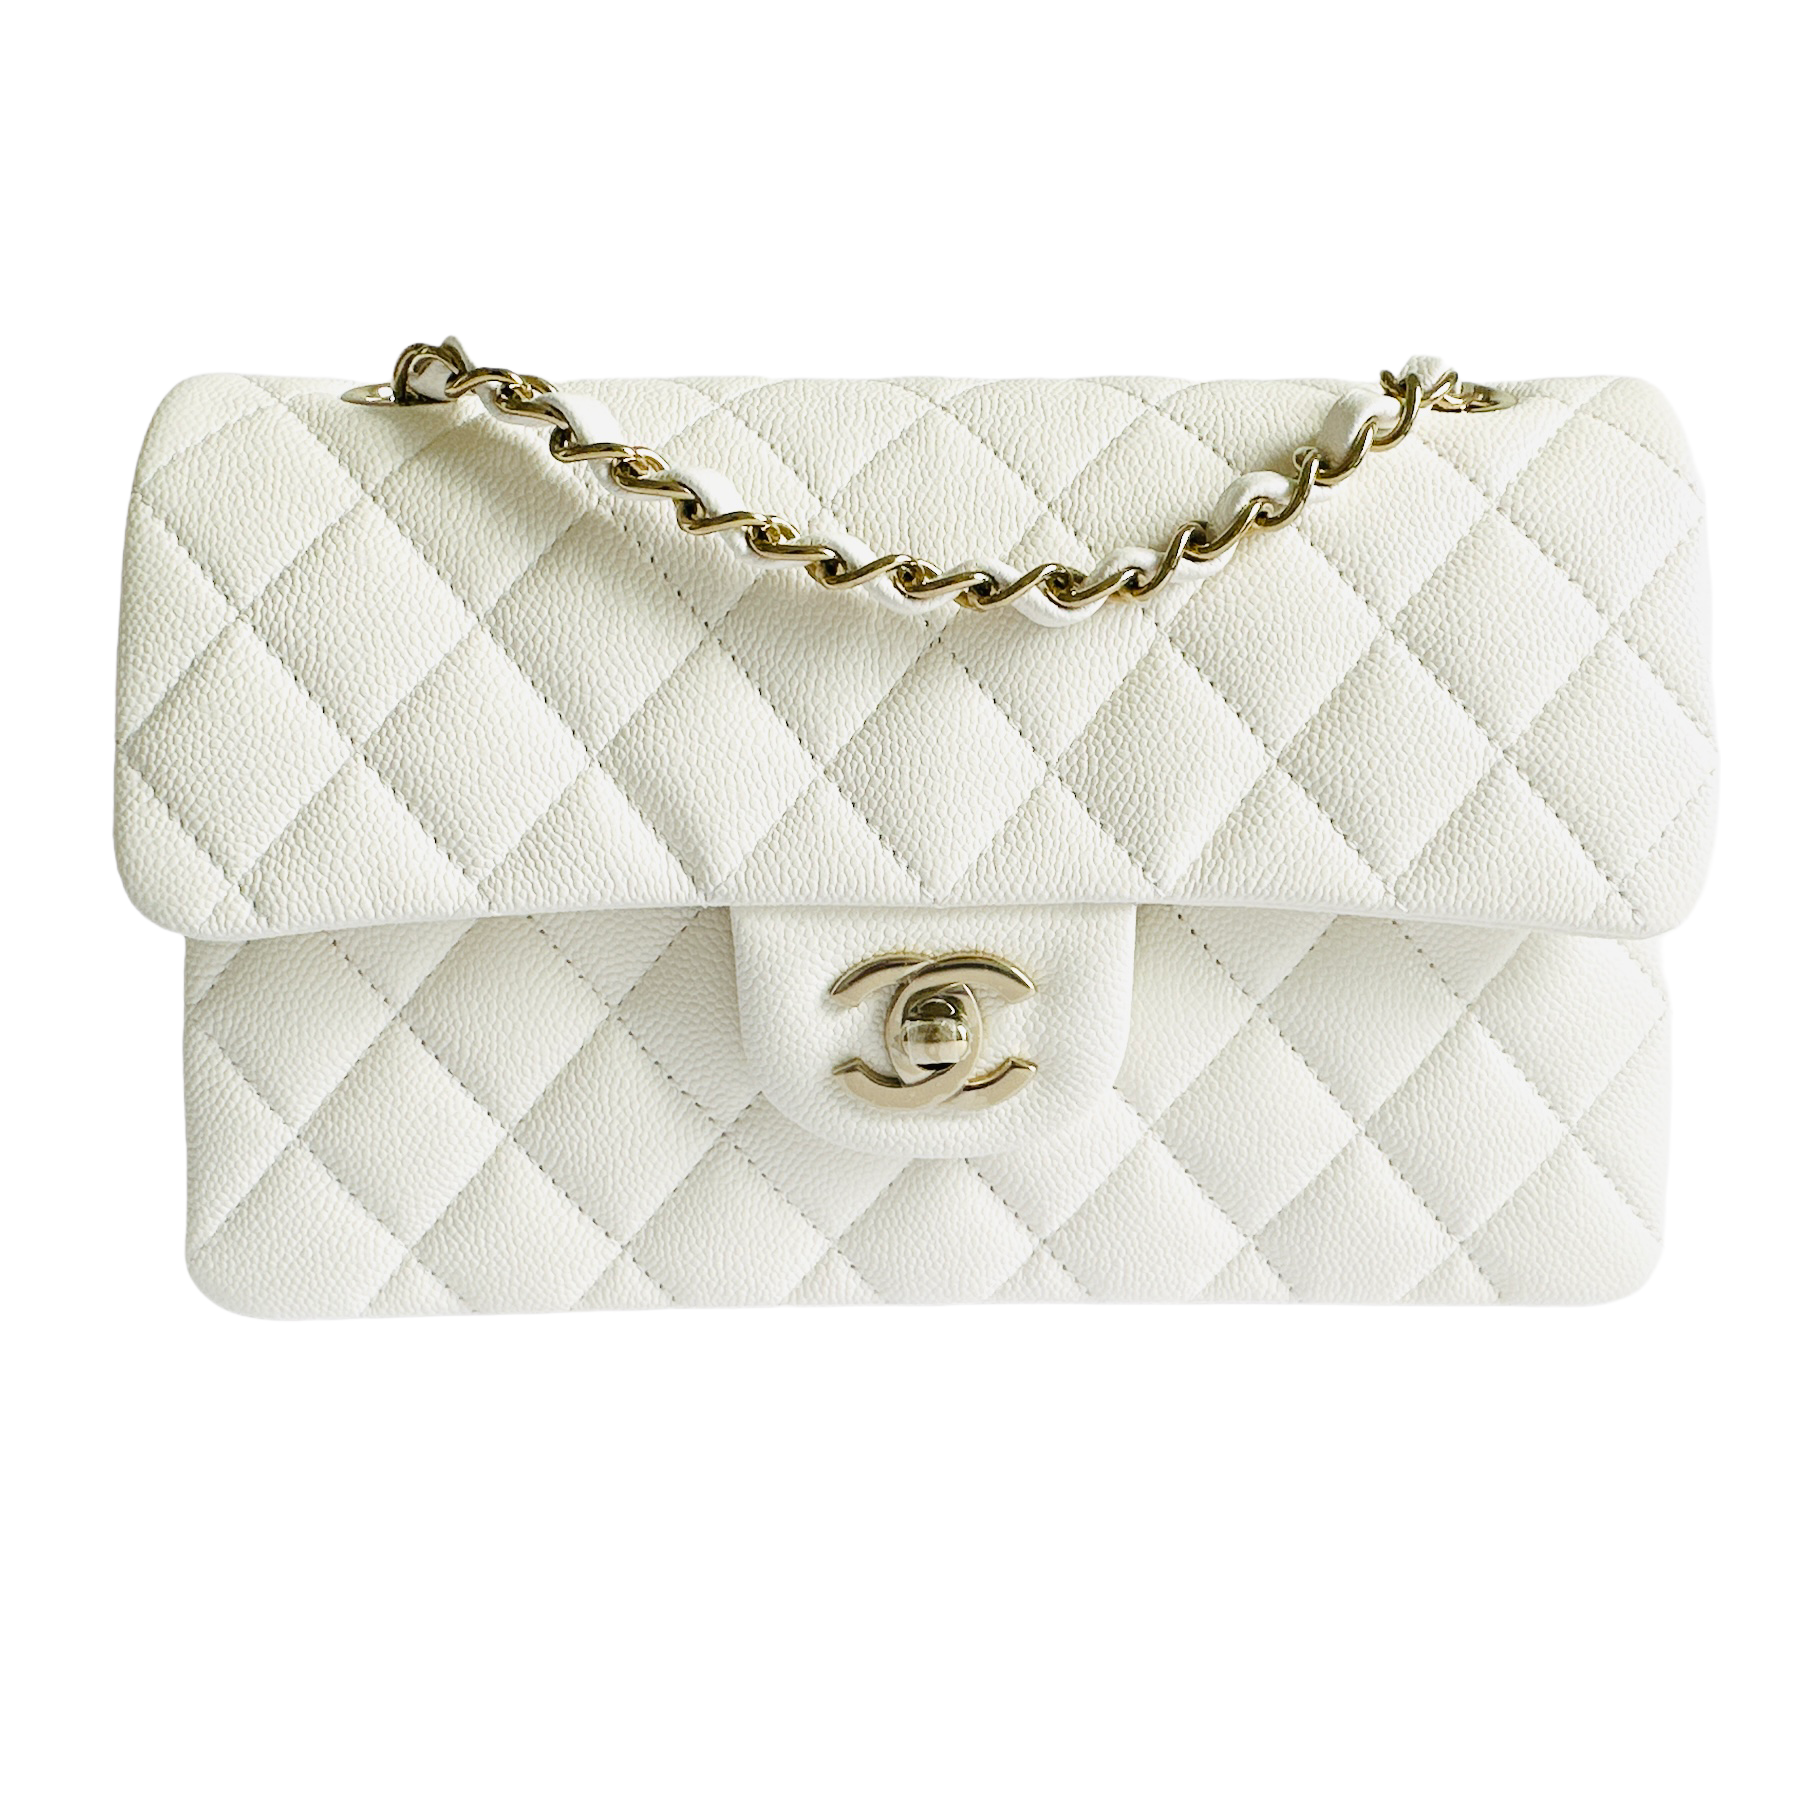 Chanel White Caviar Flap Bag - Small (NWT)